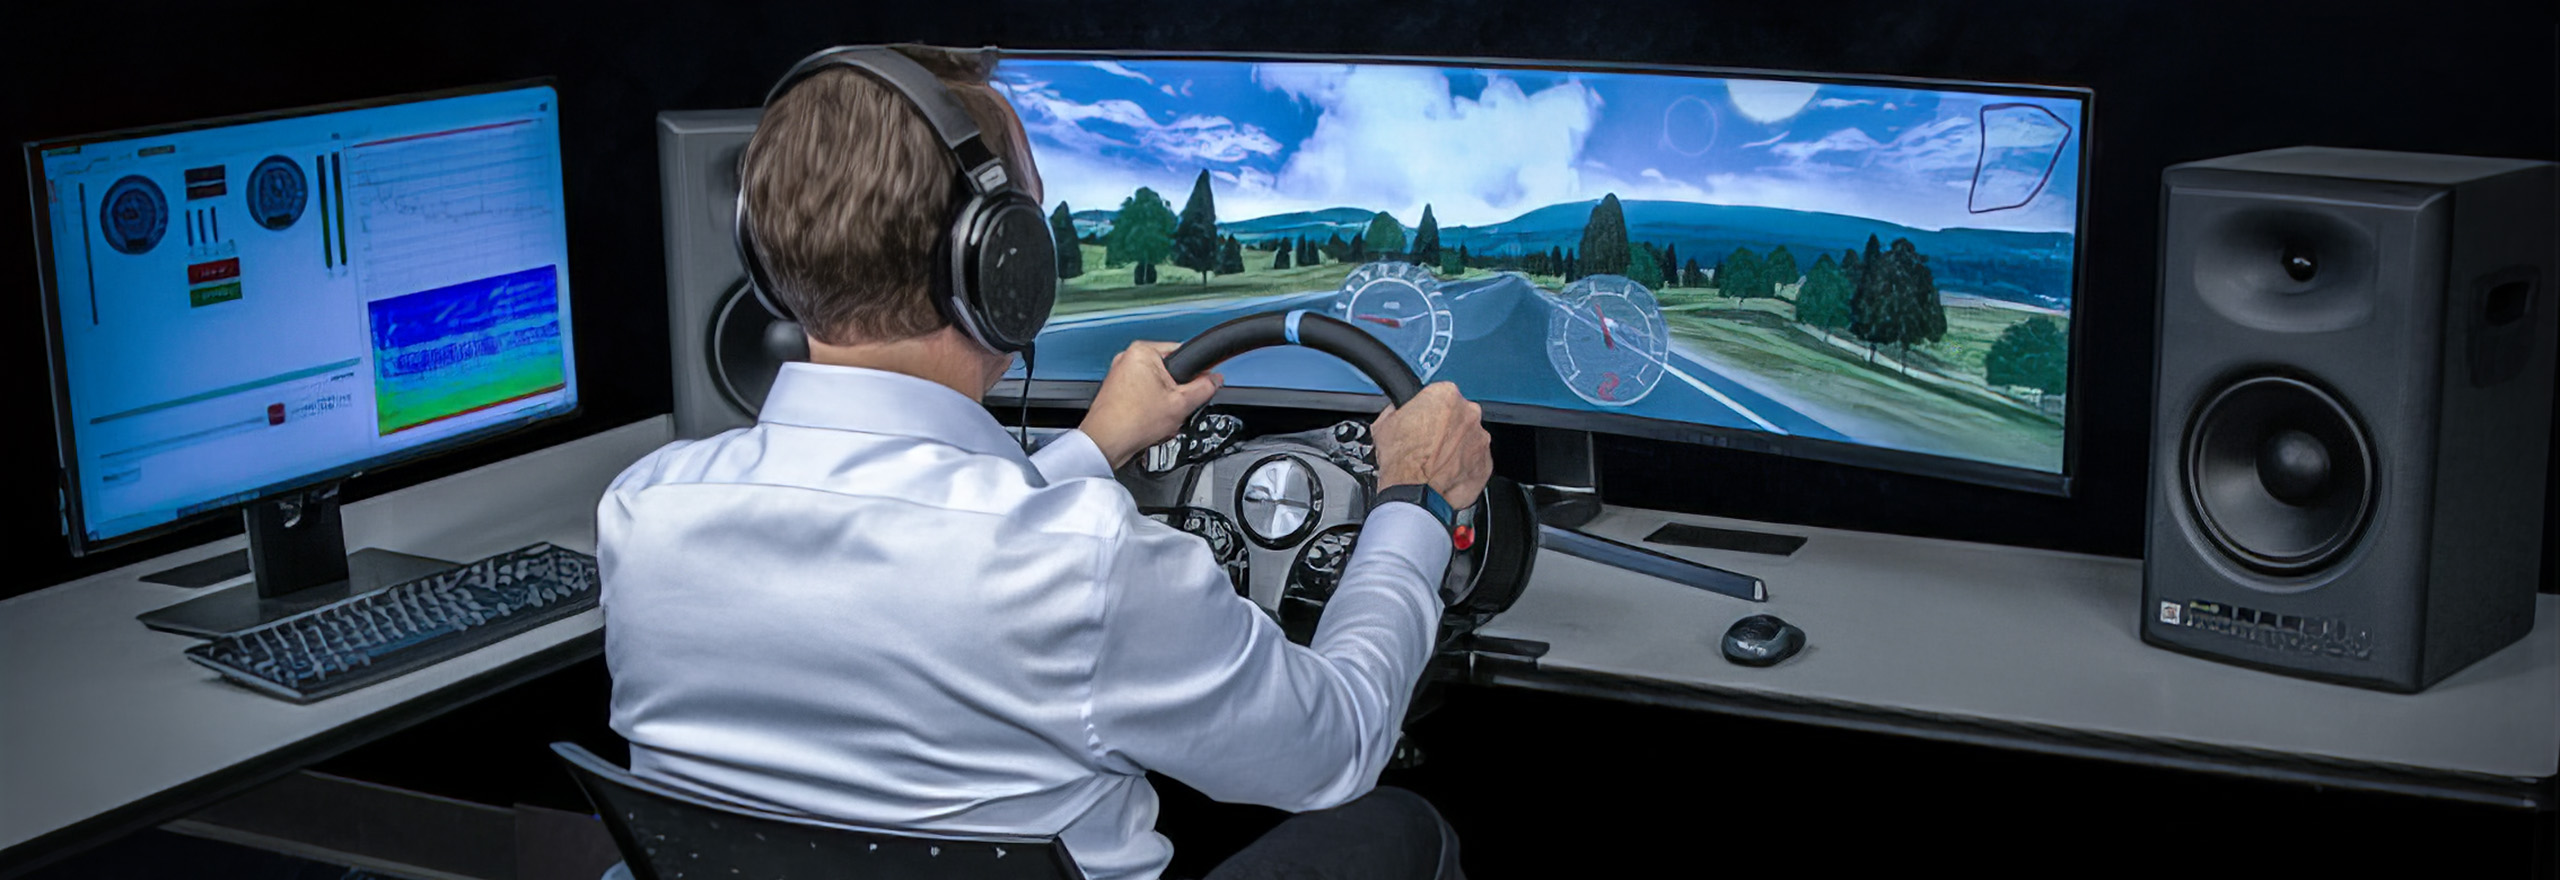 Engineer using VI grade desktop driving simulator 